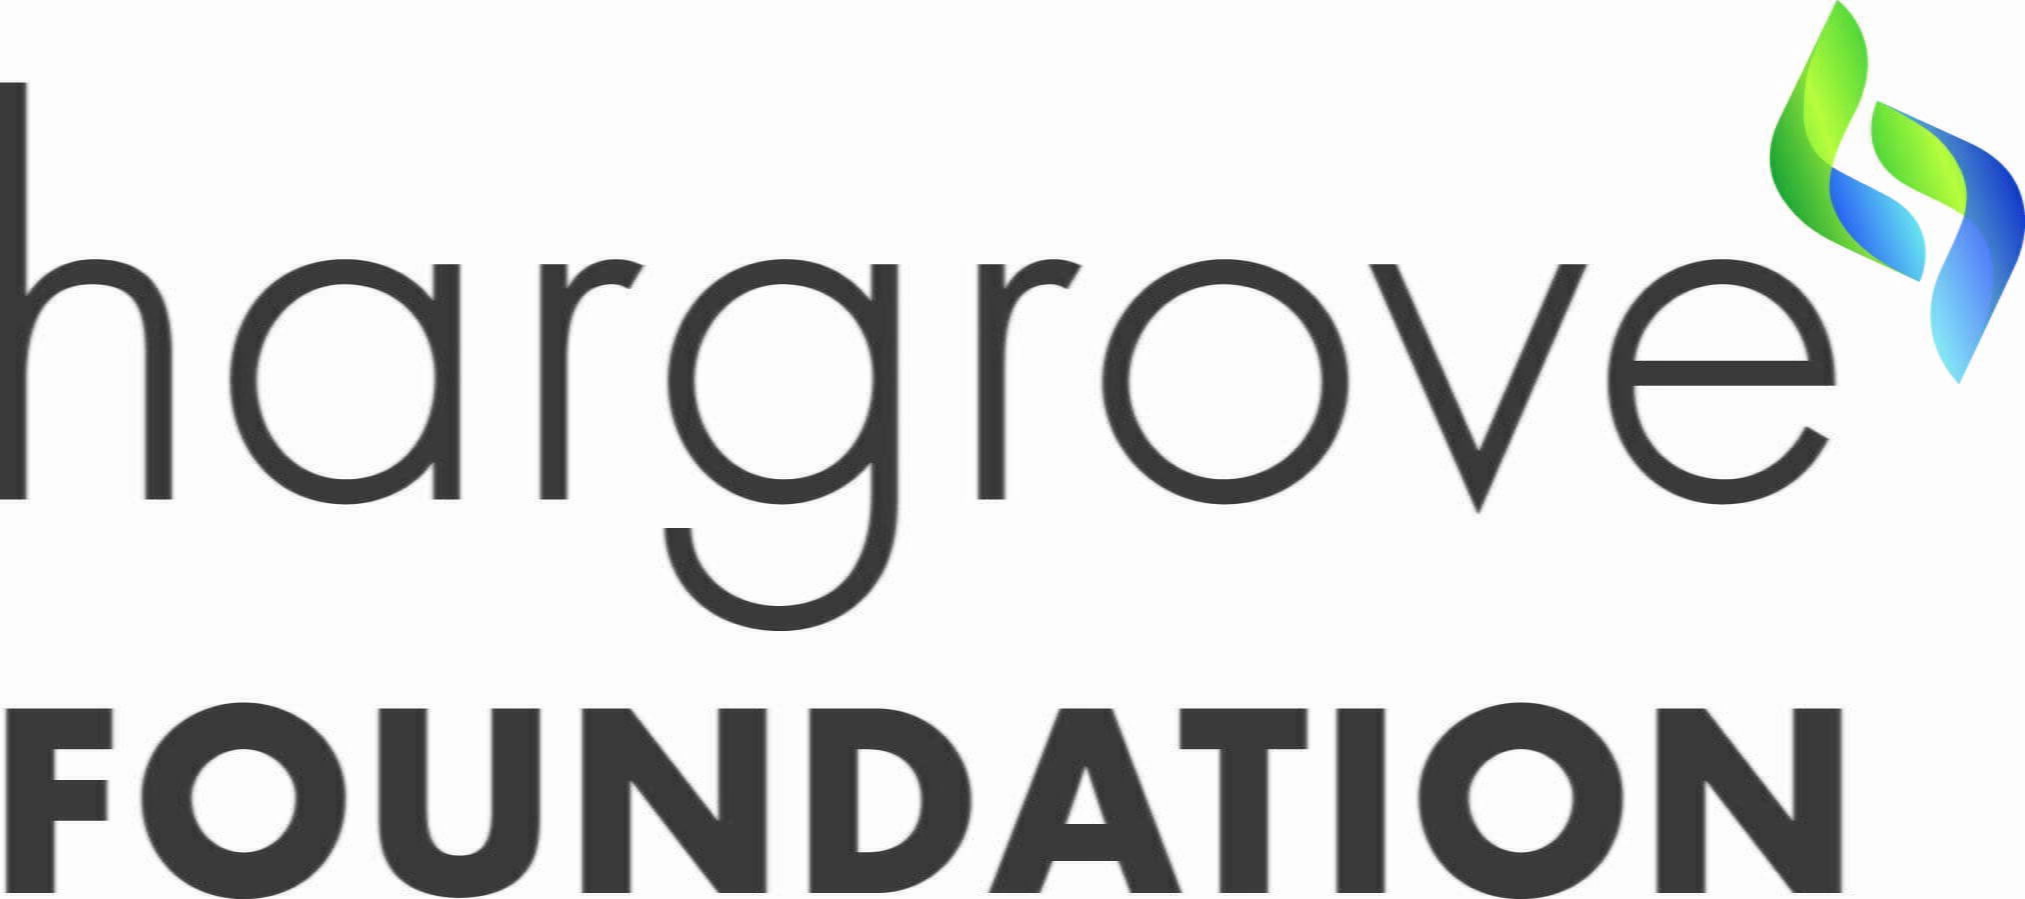 Hargrove Foundation